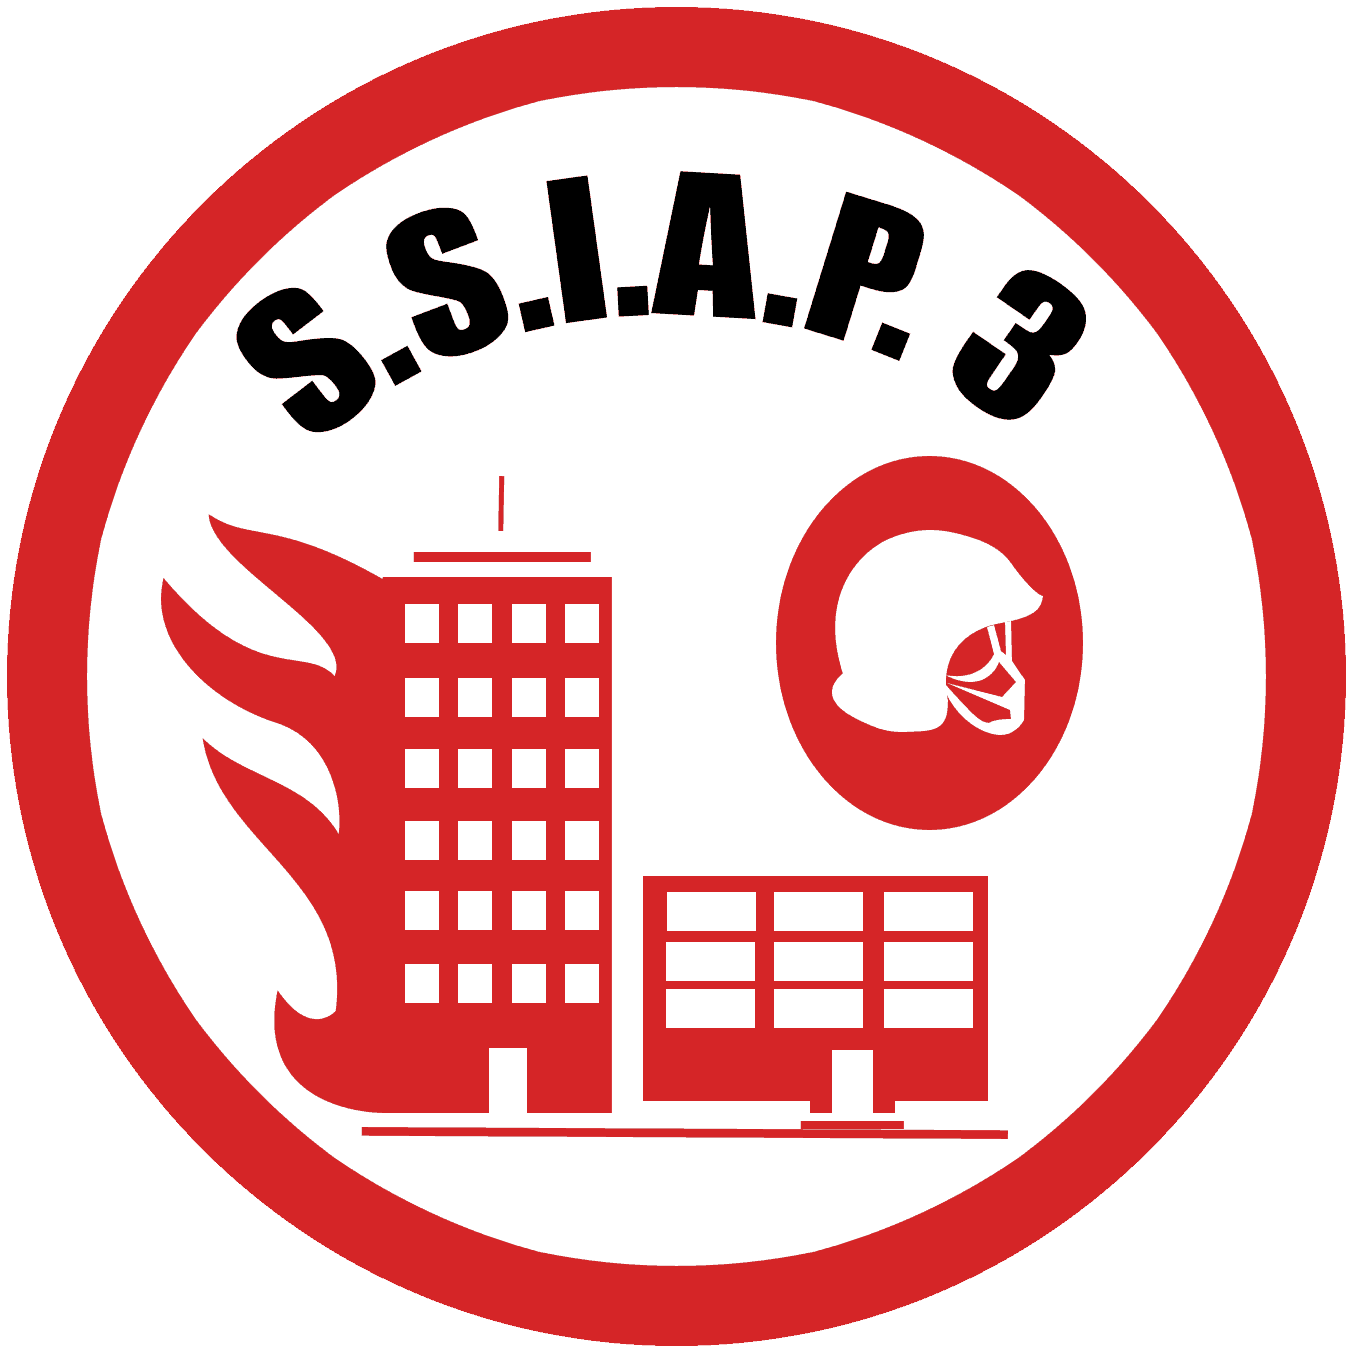 formation-ssiap-3-chef-de-service-en-securite-incendie-ffsr